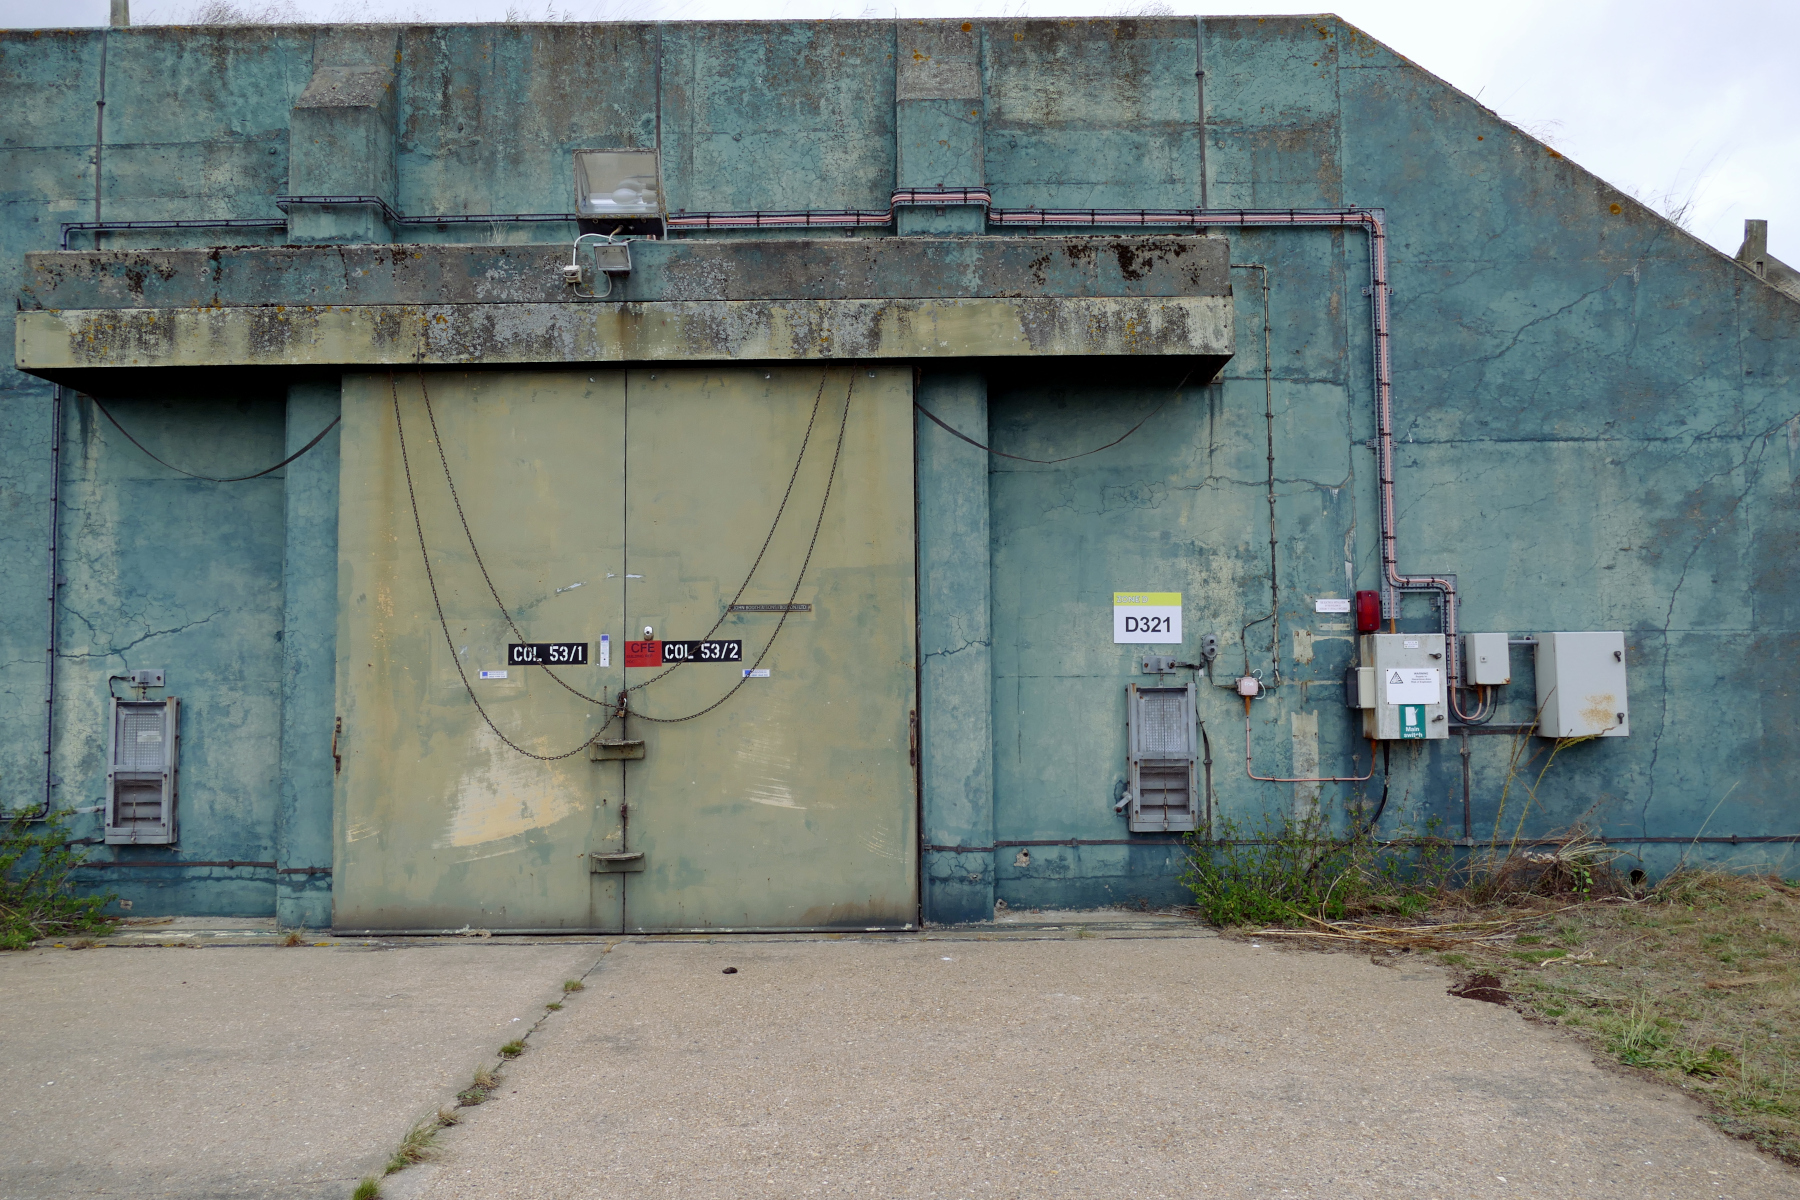 Close up of original Cold War bunker with blue front wall, green blast door